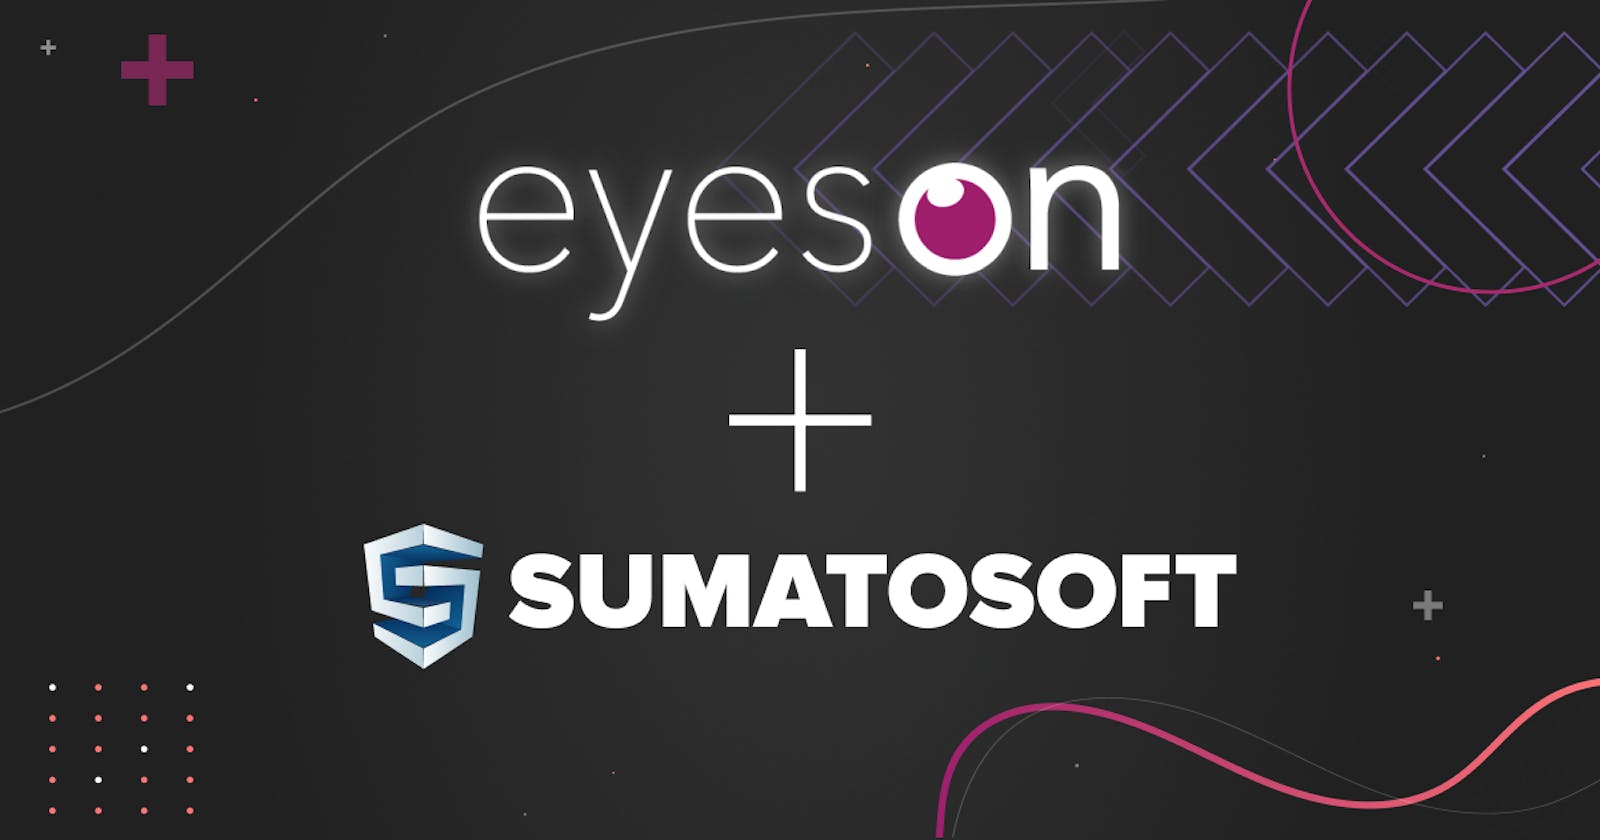 SumatoSoft Has Become a Technological Partner of eyeson!